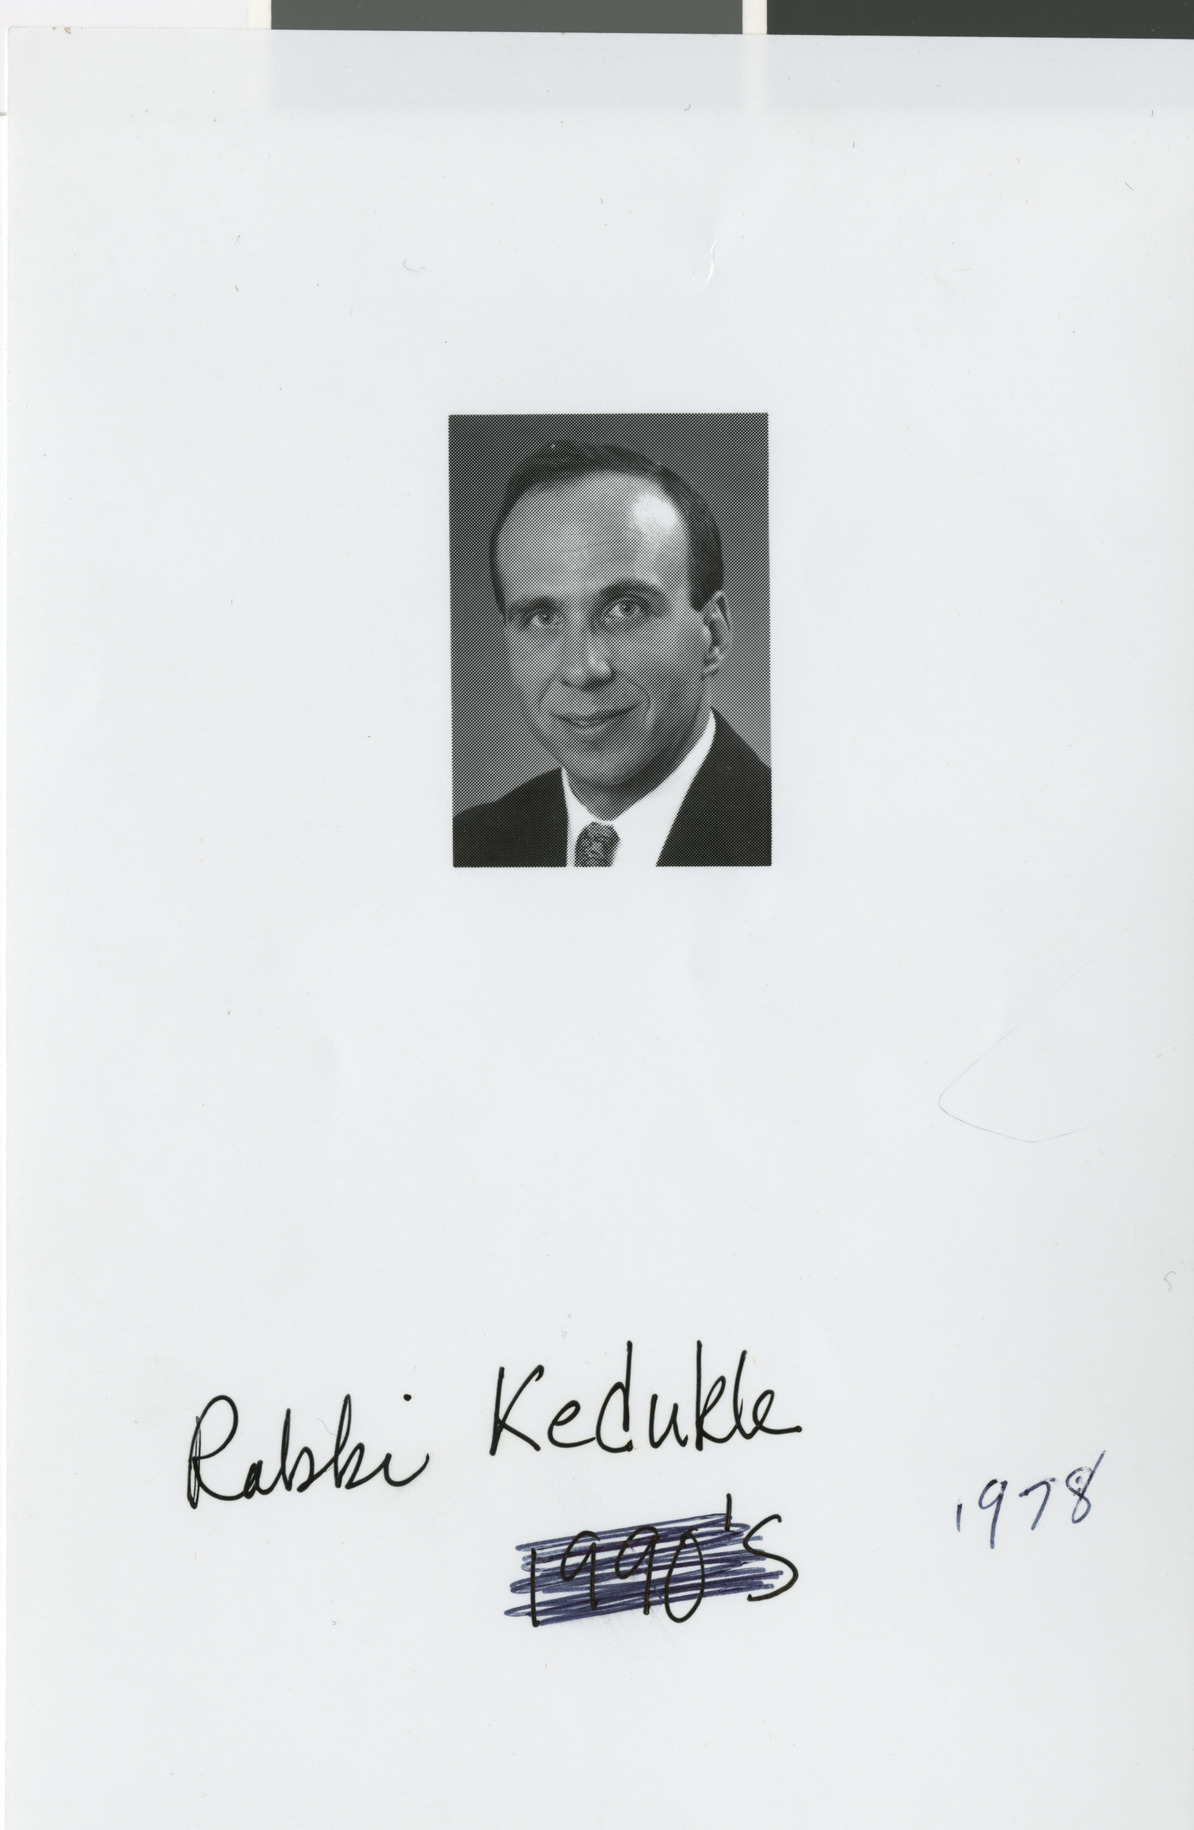 Photograph of Rabbi Kedukle, 1978